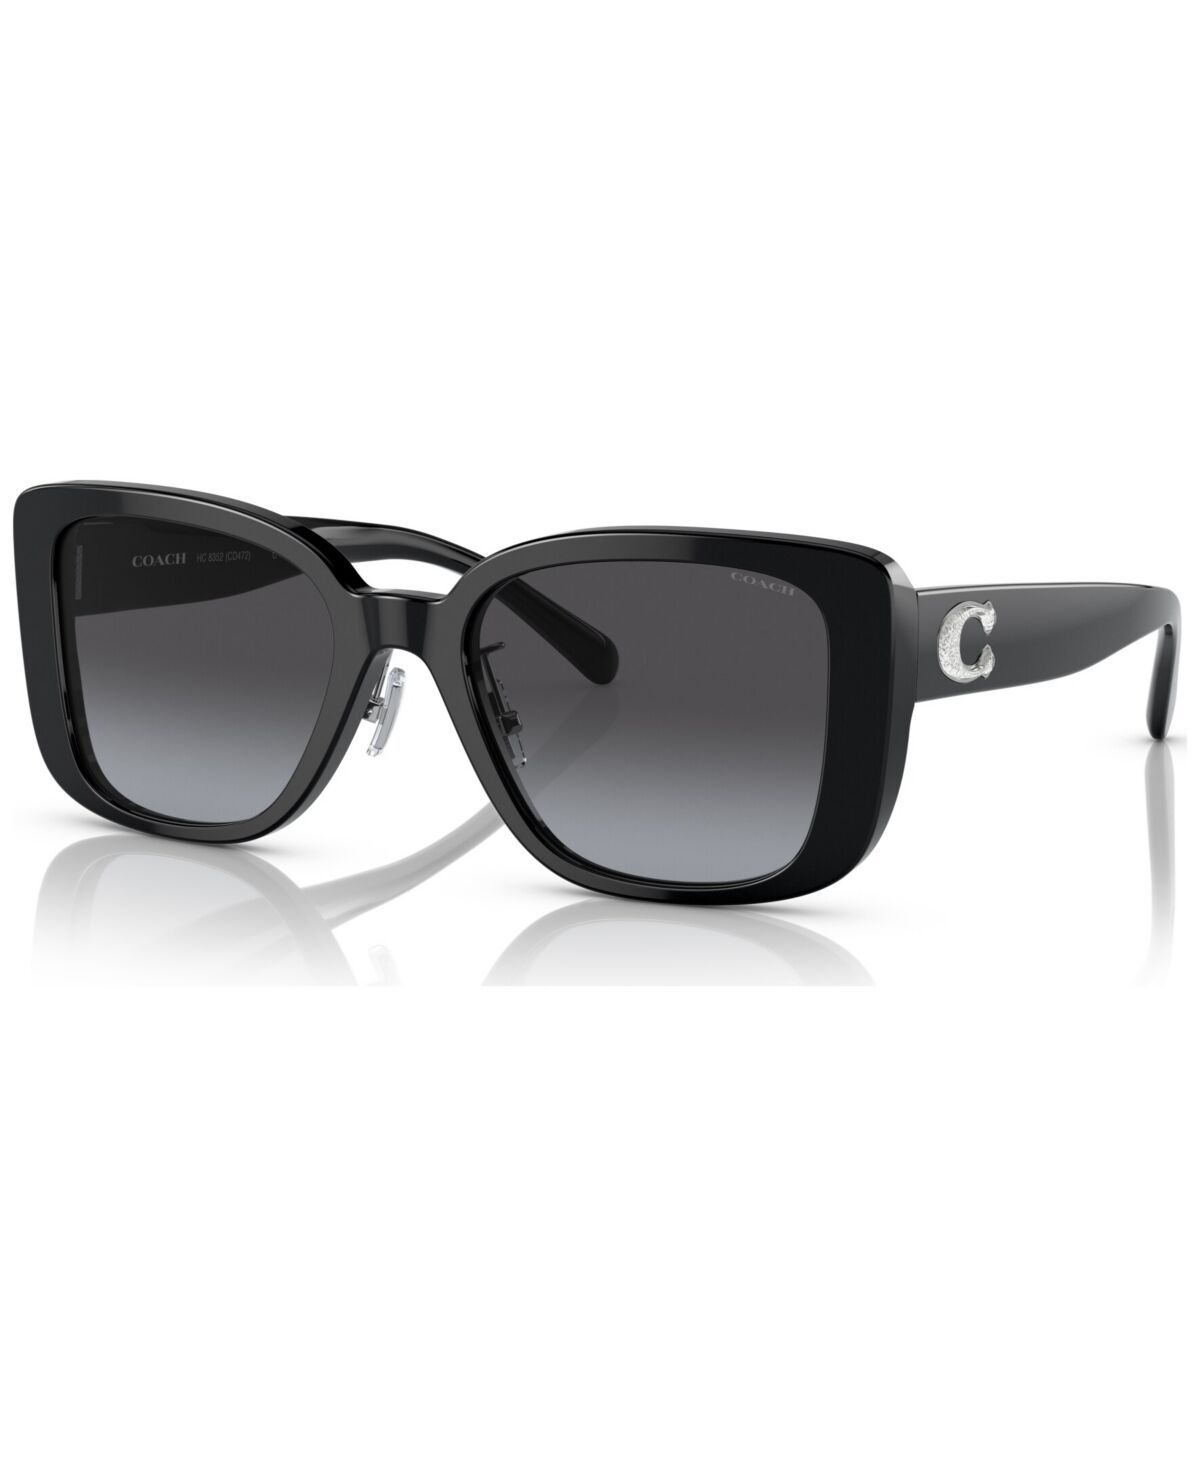 Coach Women's Sunglasses, HC8352 - Black